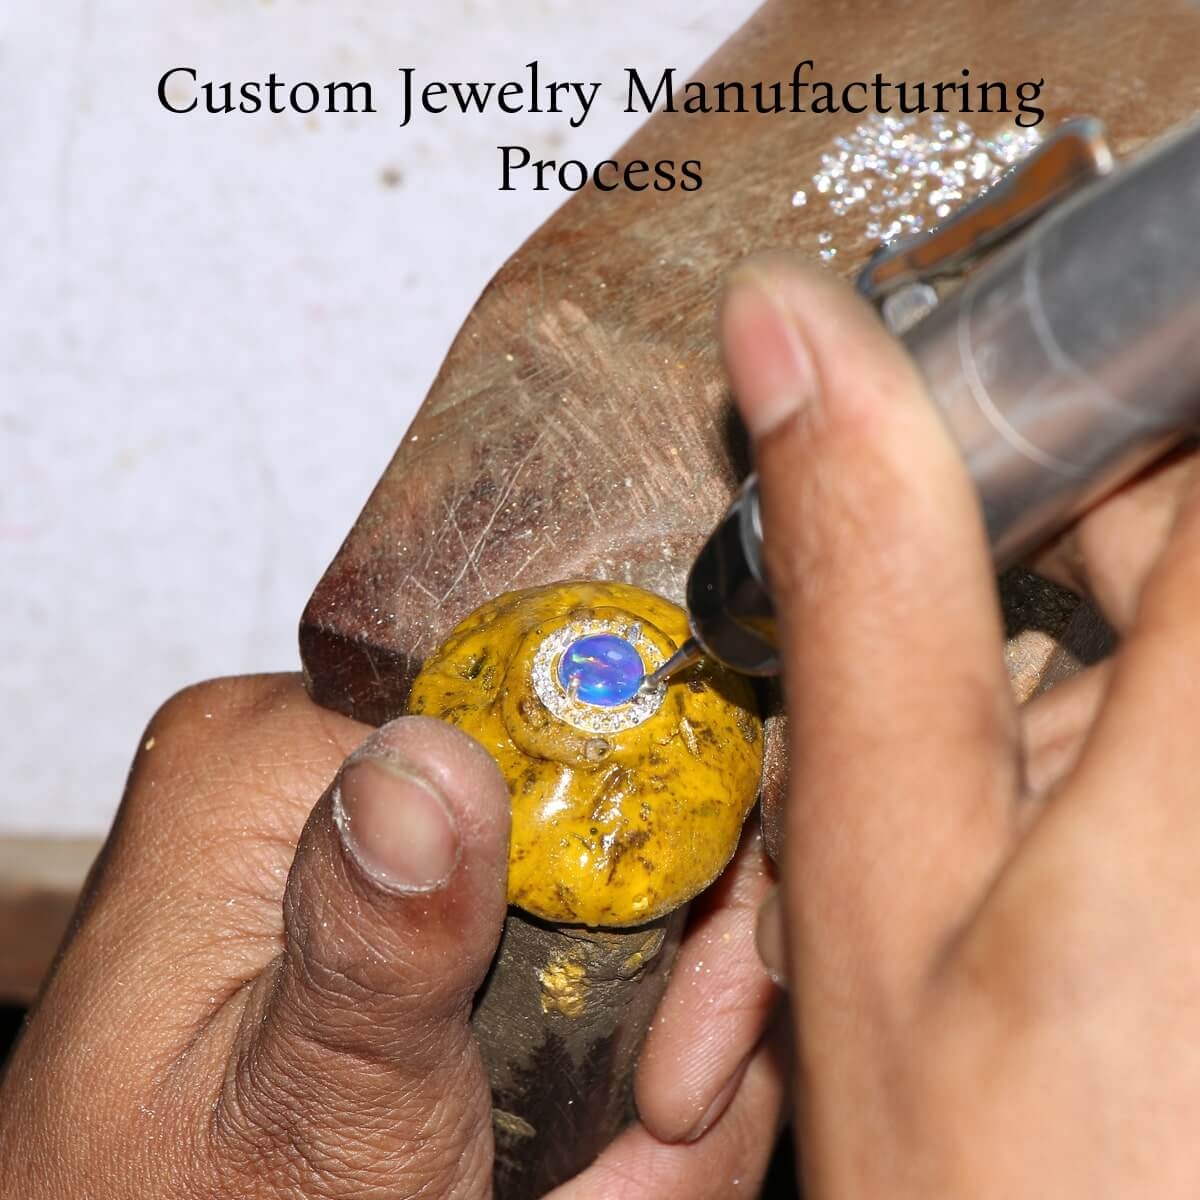 How Custom Jewelry Manufacturing